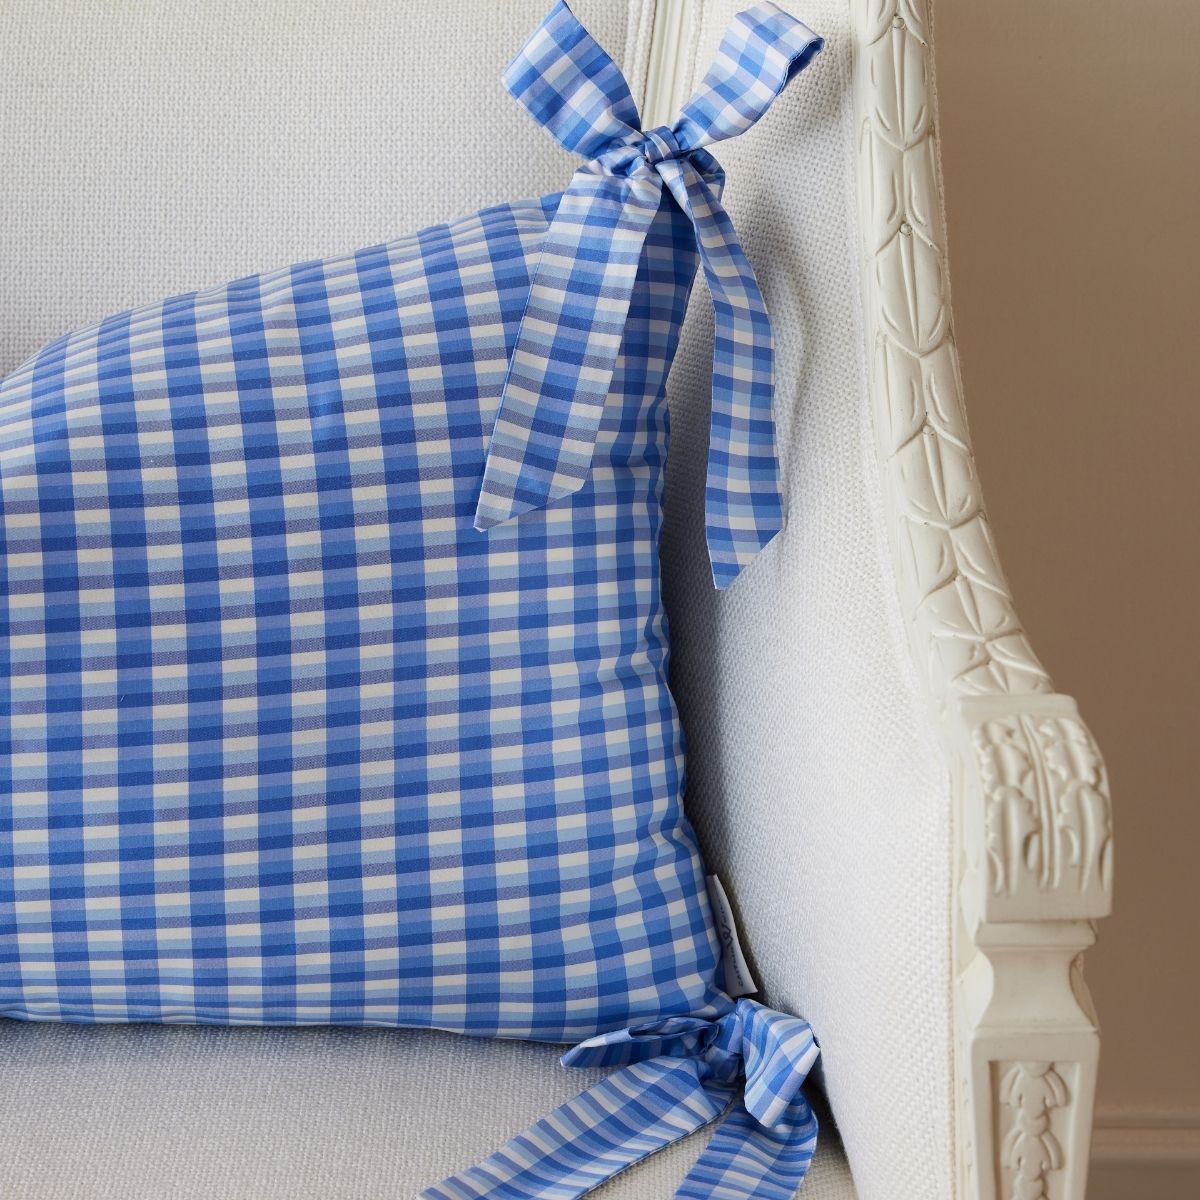 Vichy Check Bow Pillow in Cornflower Blue